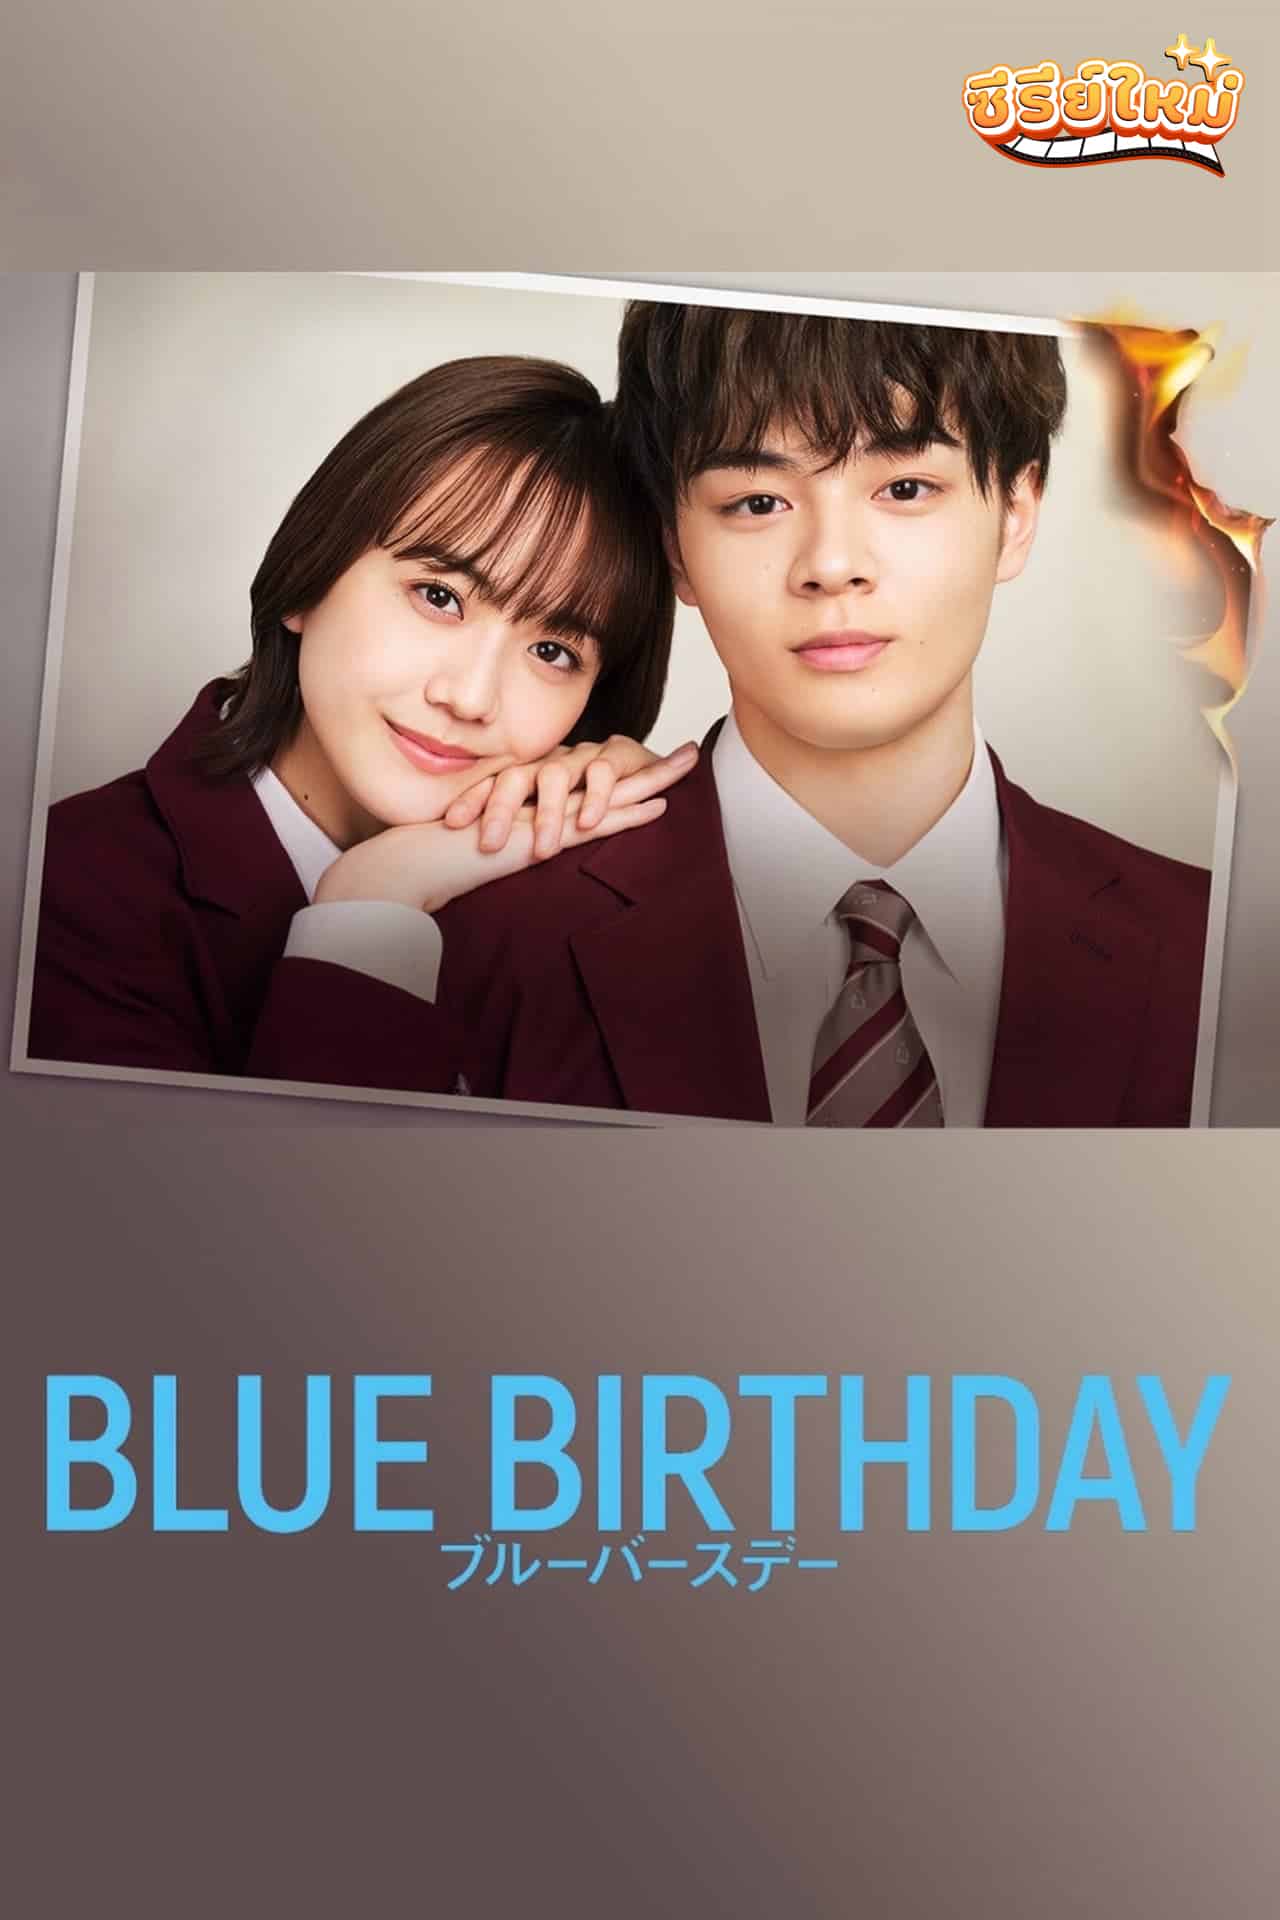 Blue Birthday (2021)